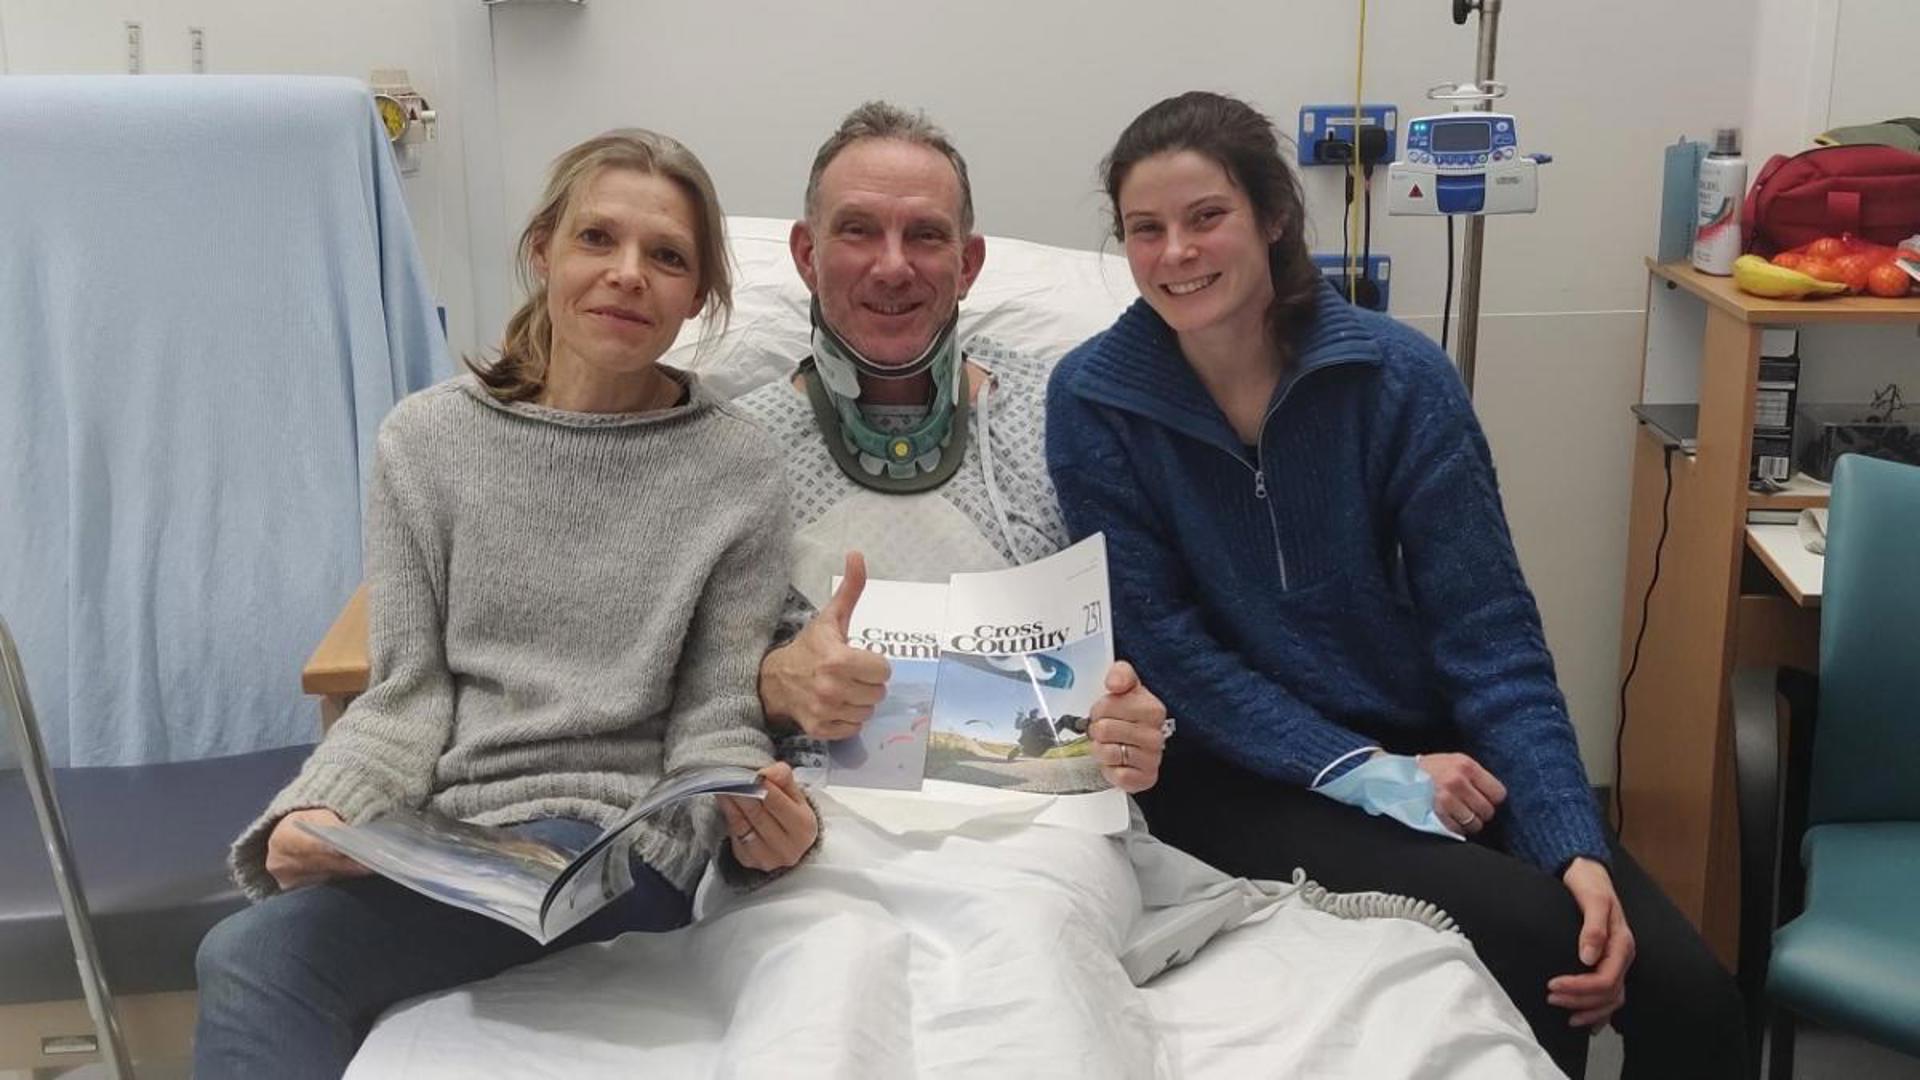 Three people sat on a hospital bed